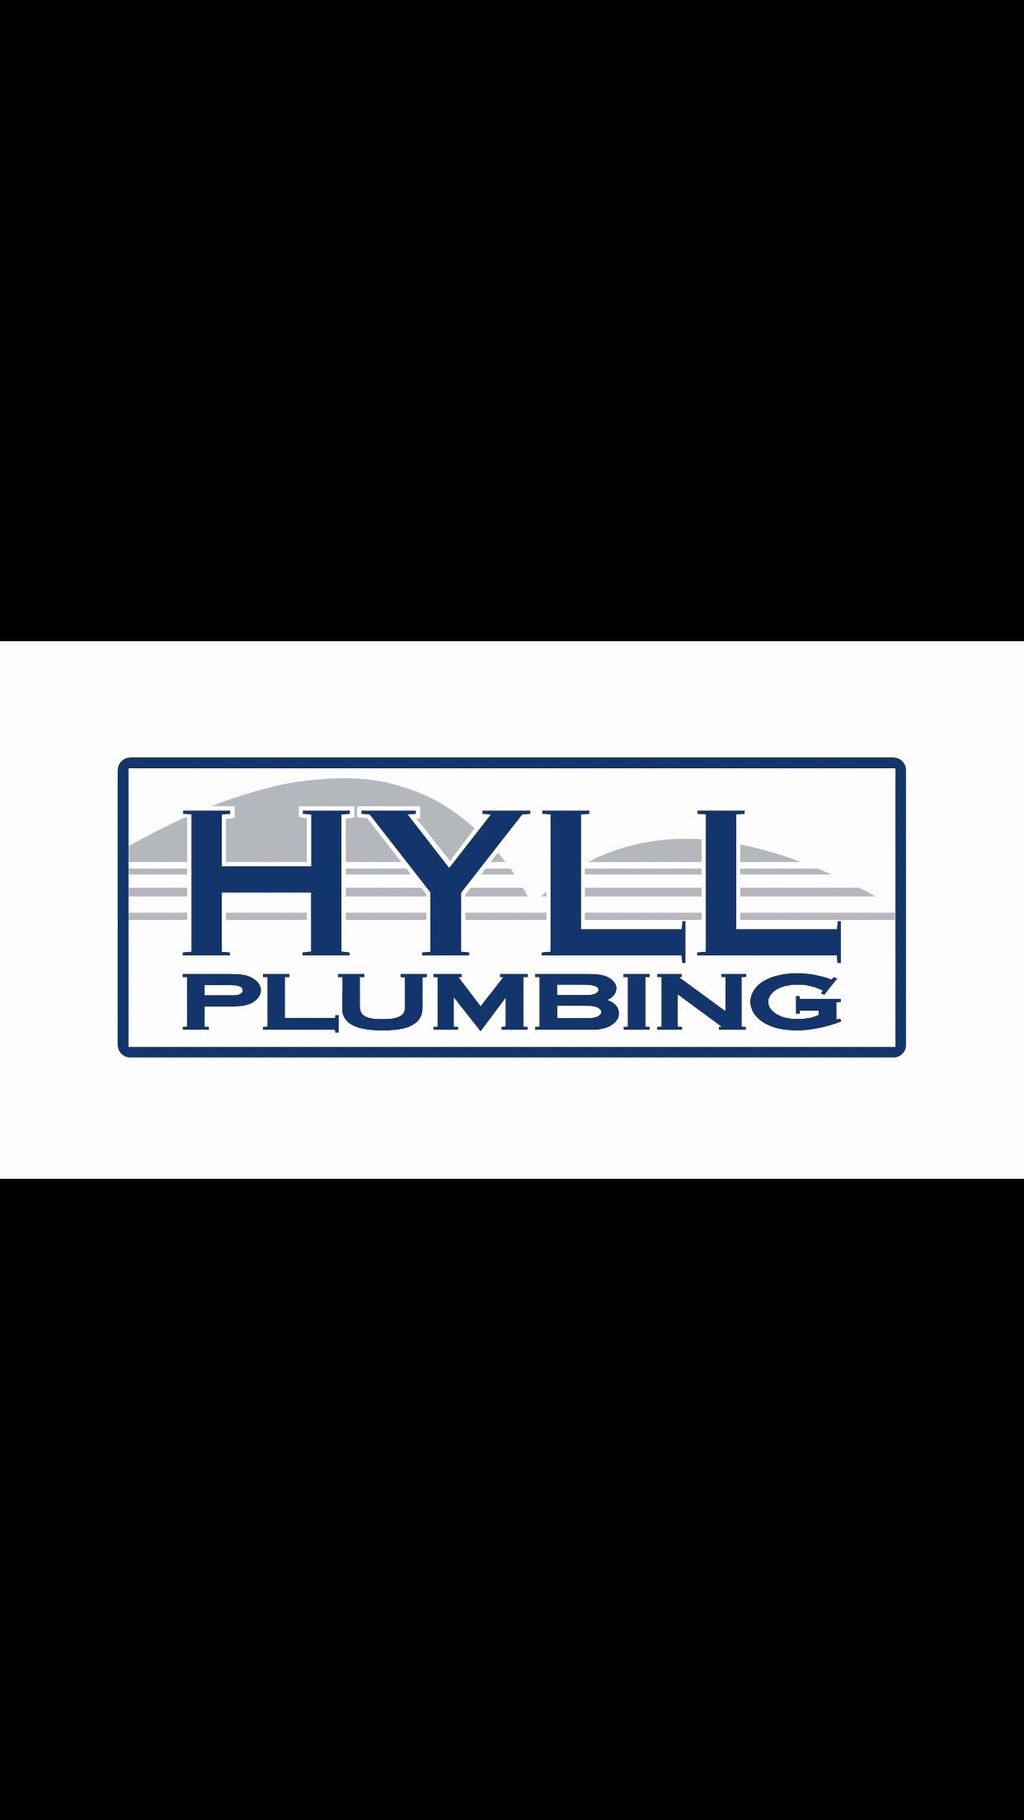 HYLL Plumbing